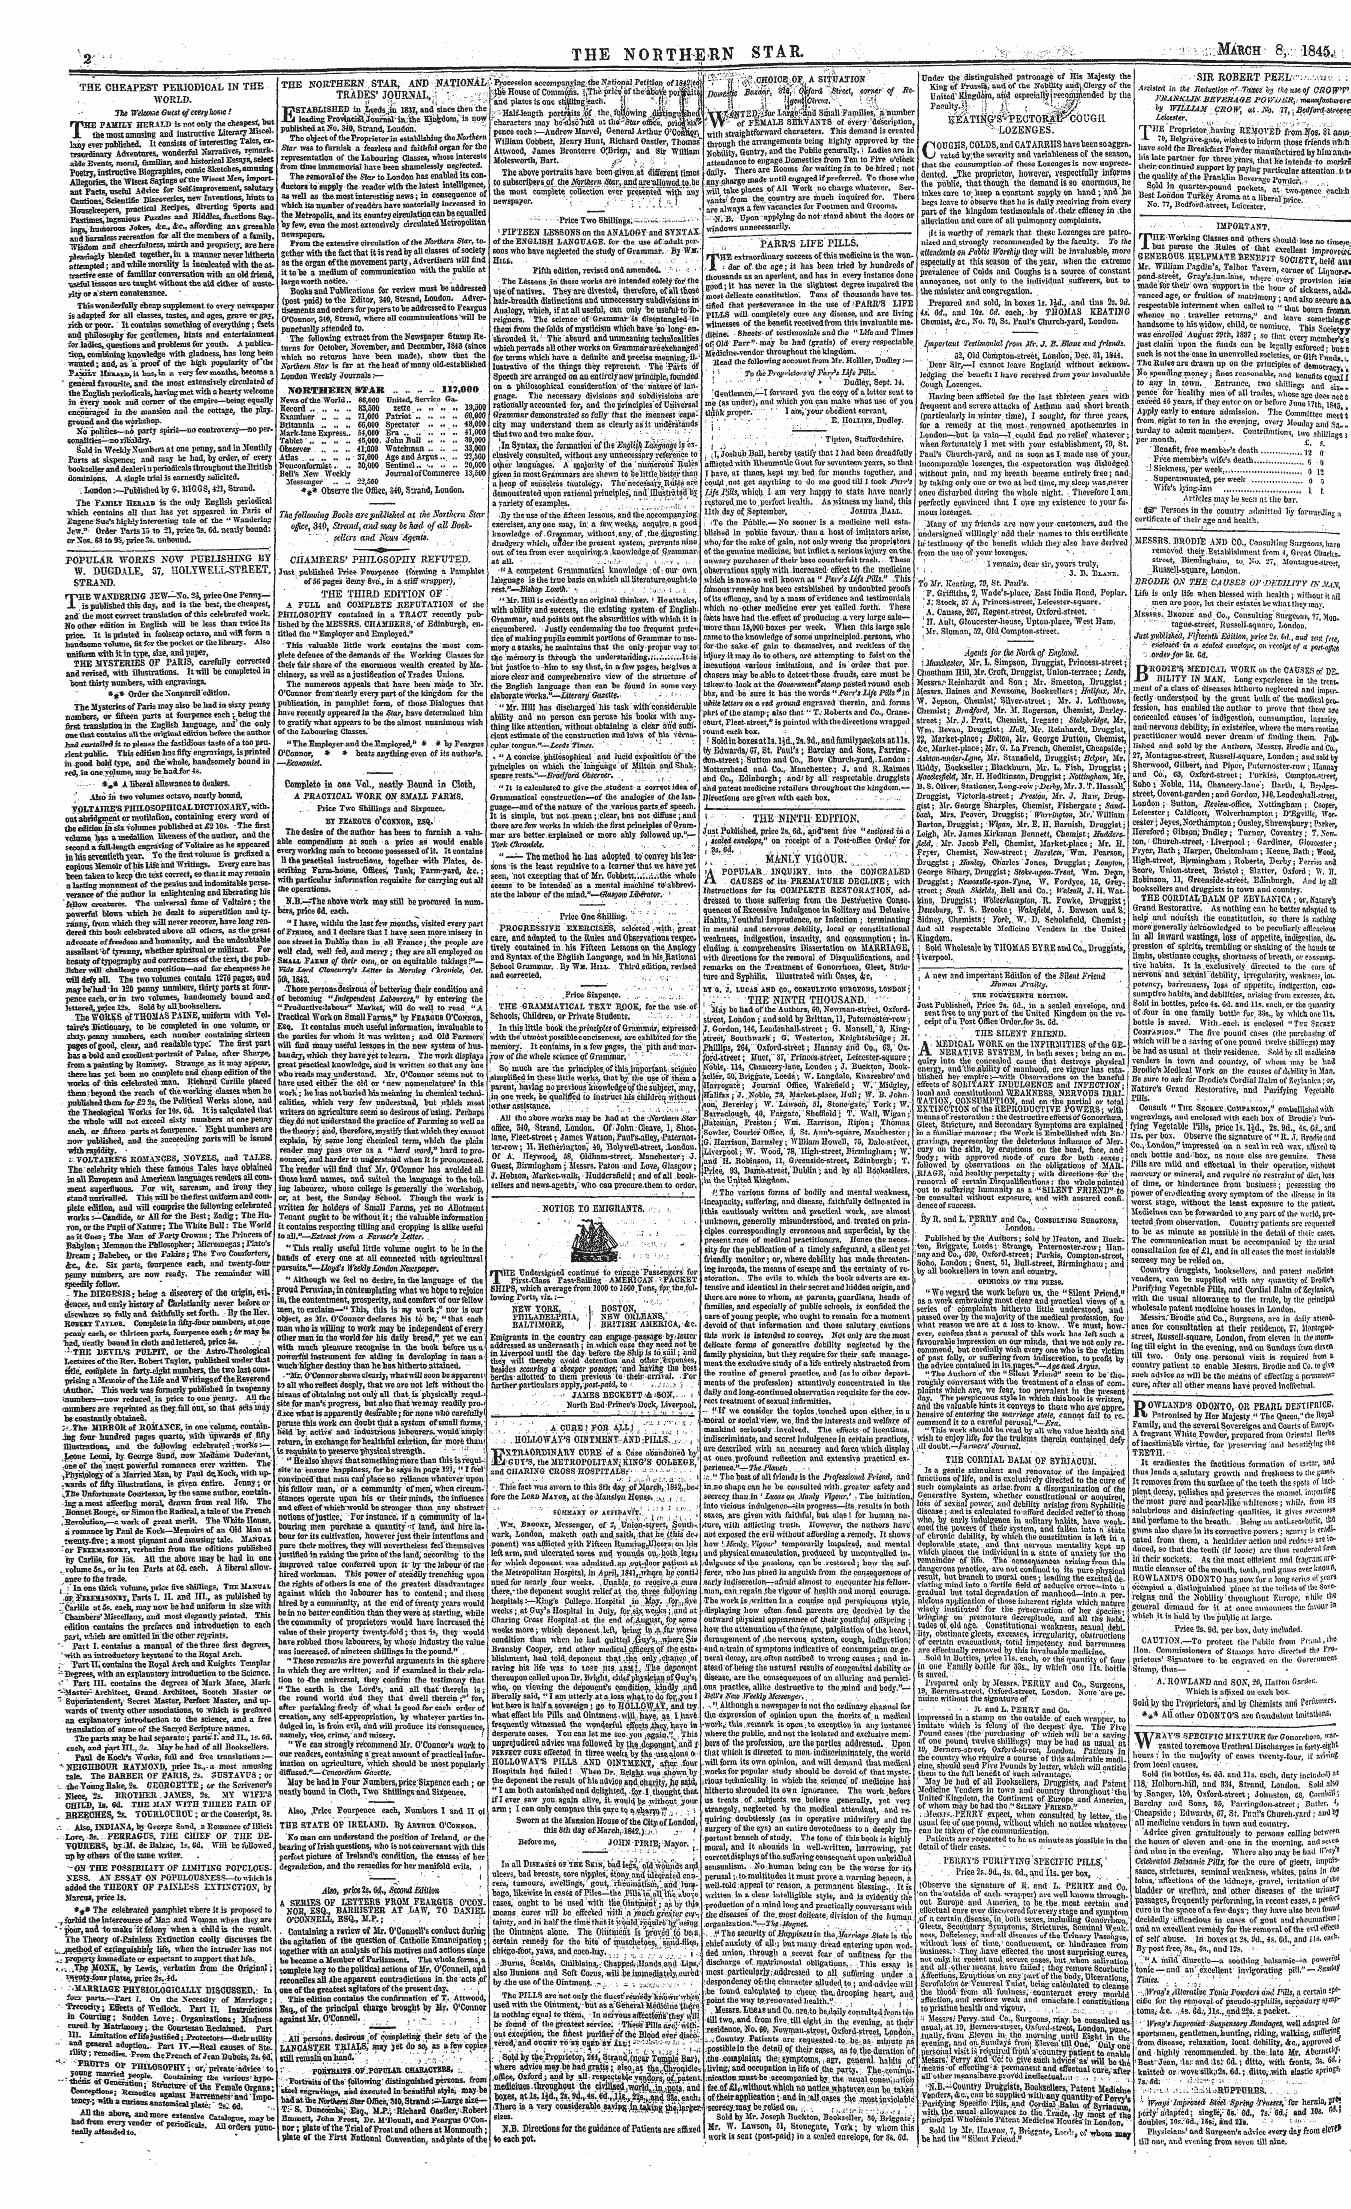 Northern Star (1837-1852): jS F Y, 3rd edition - Ad00210